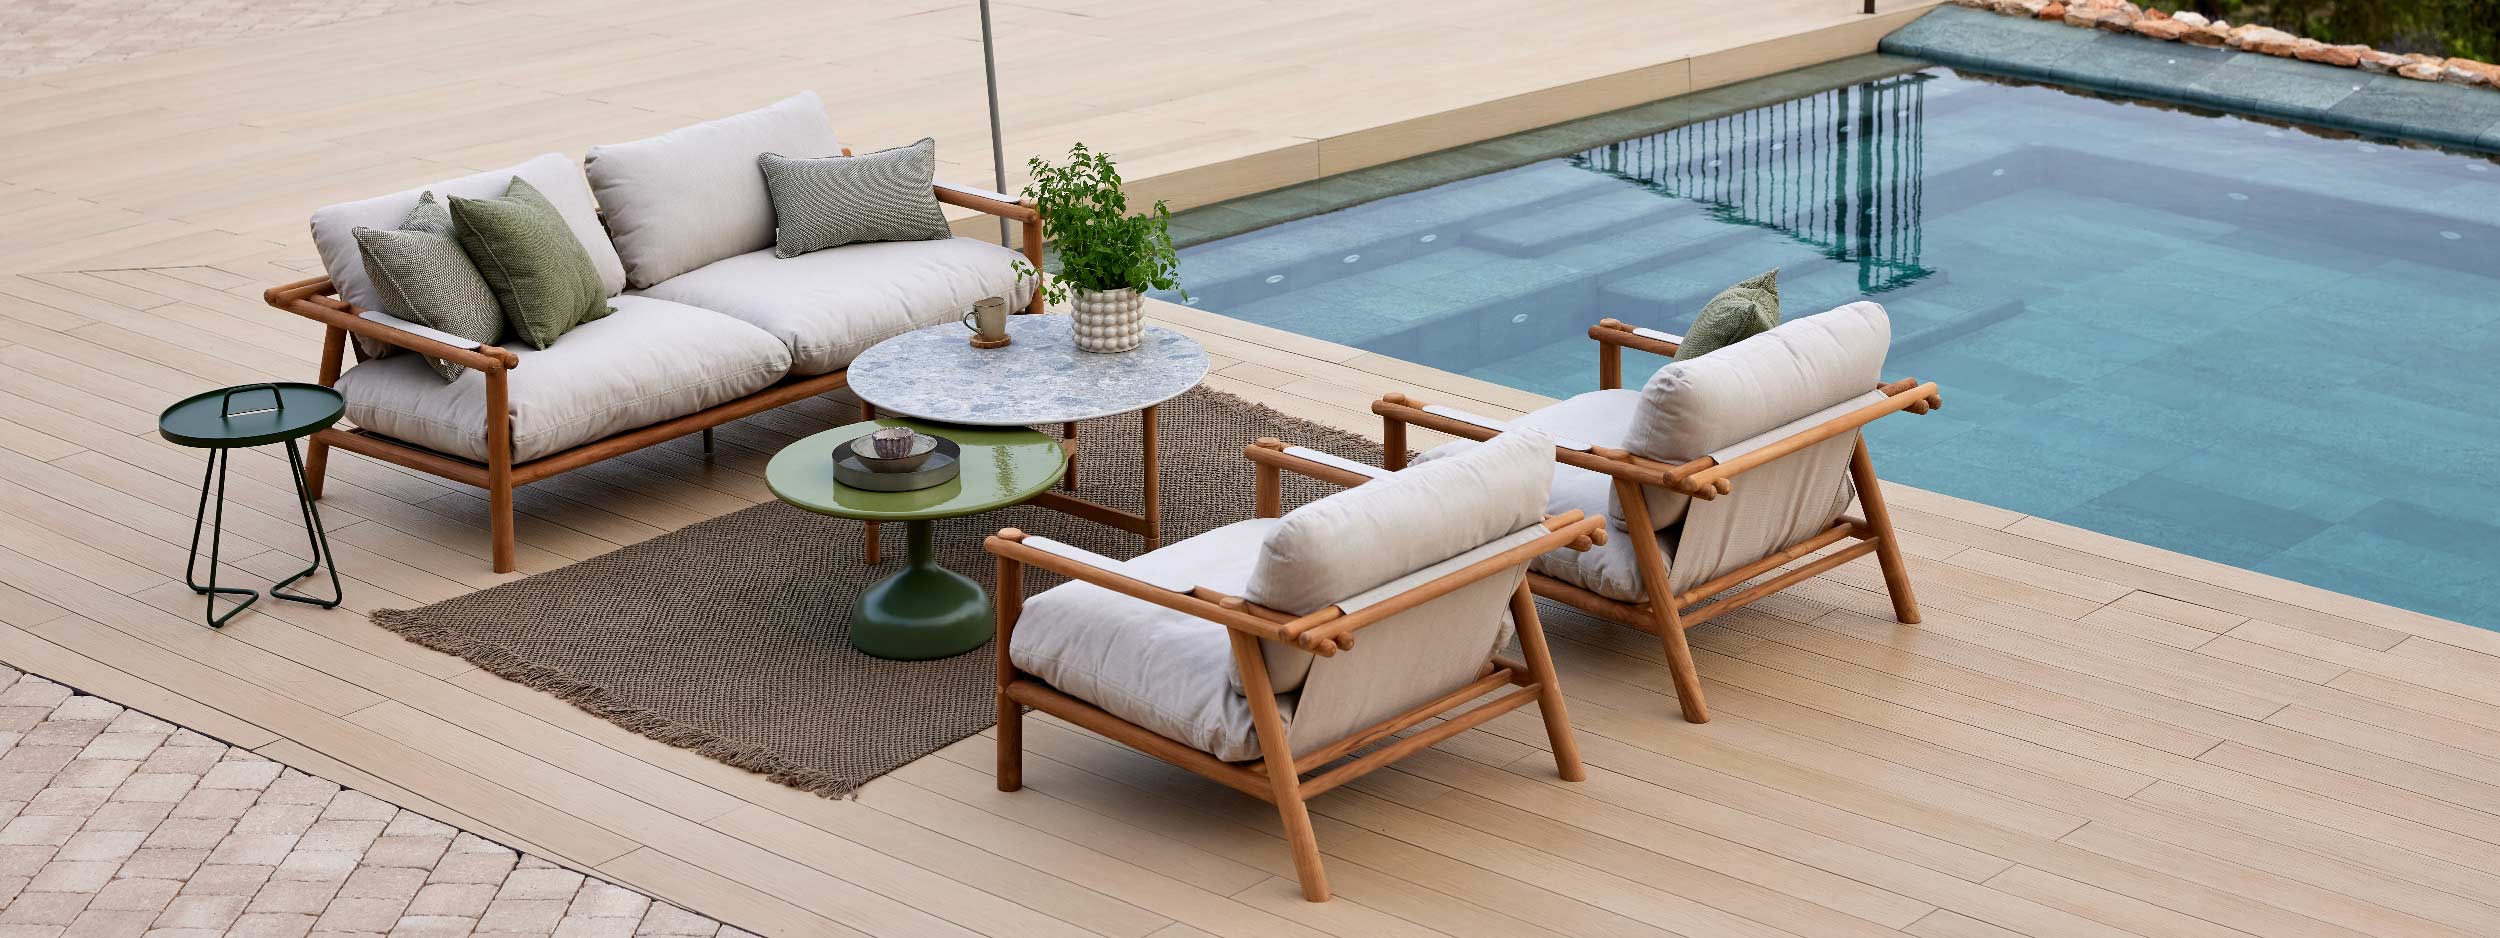 Image of Sticks FSC teak garden sofa and lounge chairs alongside swimming pool